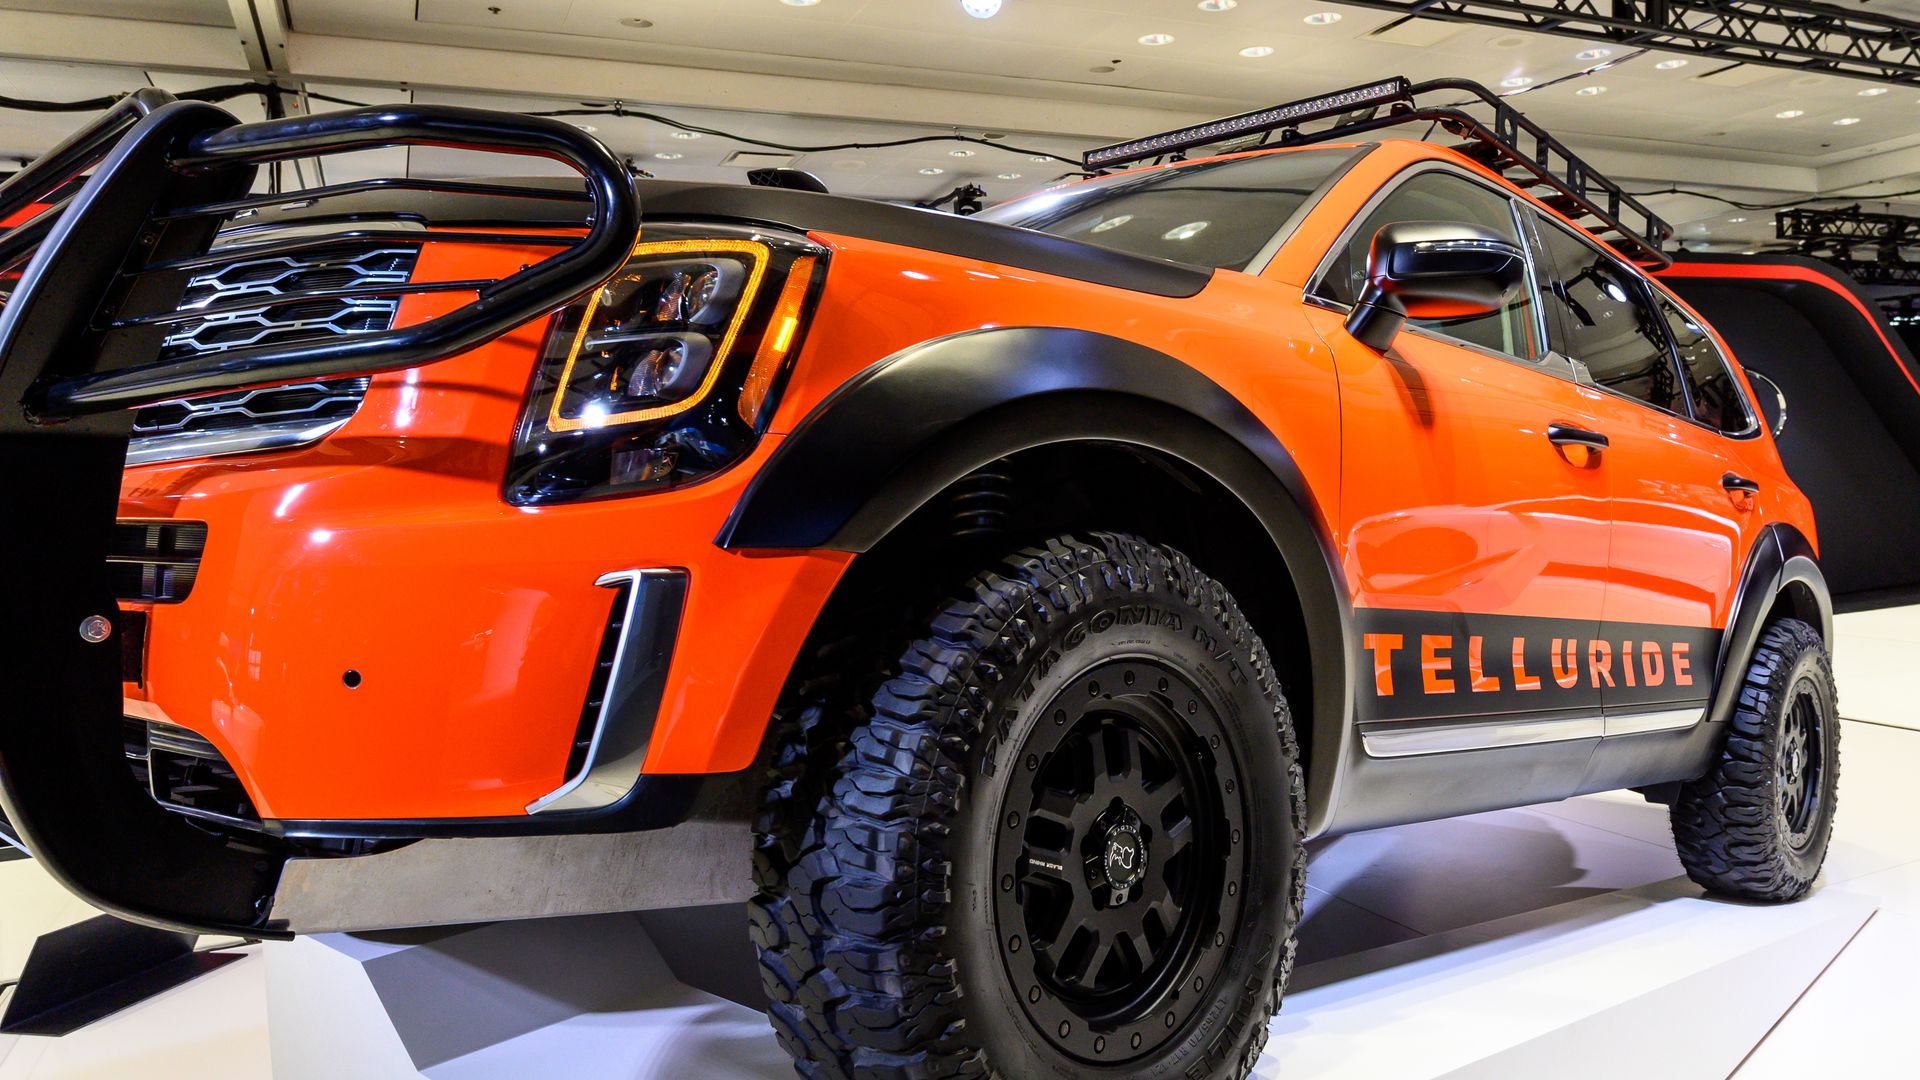  Kia Telluride seen at the New York International Auto Show.